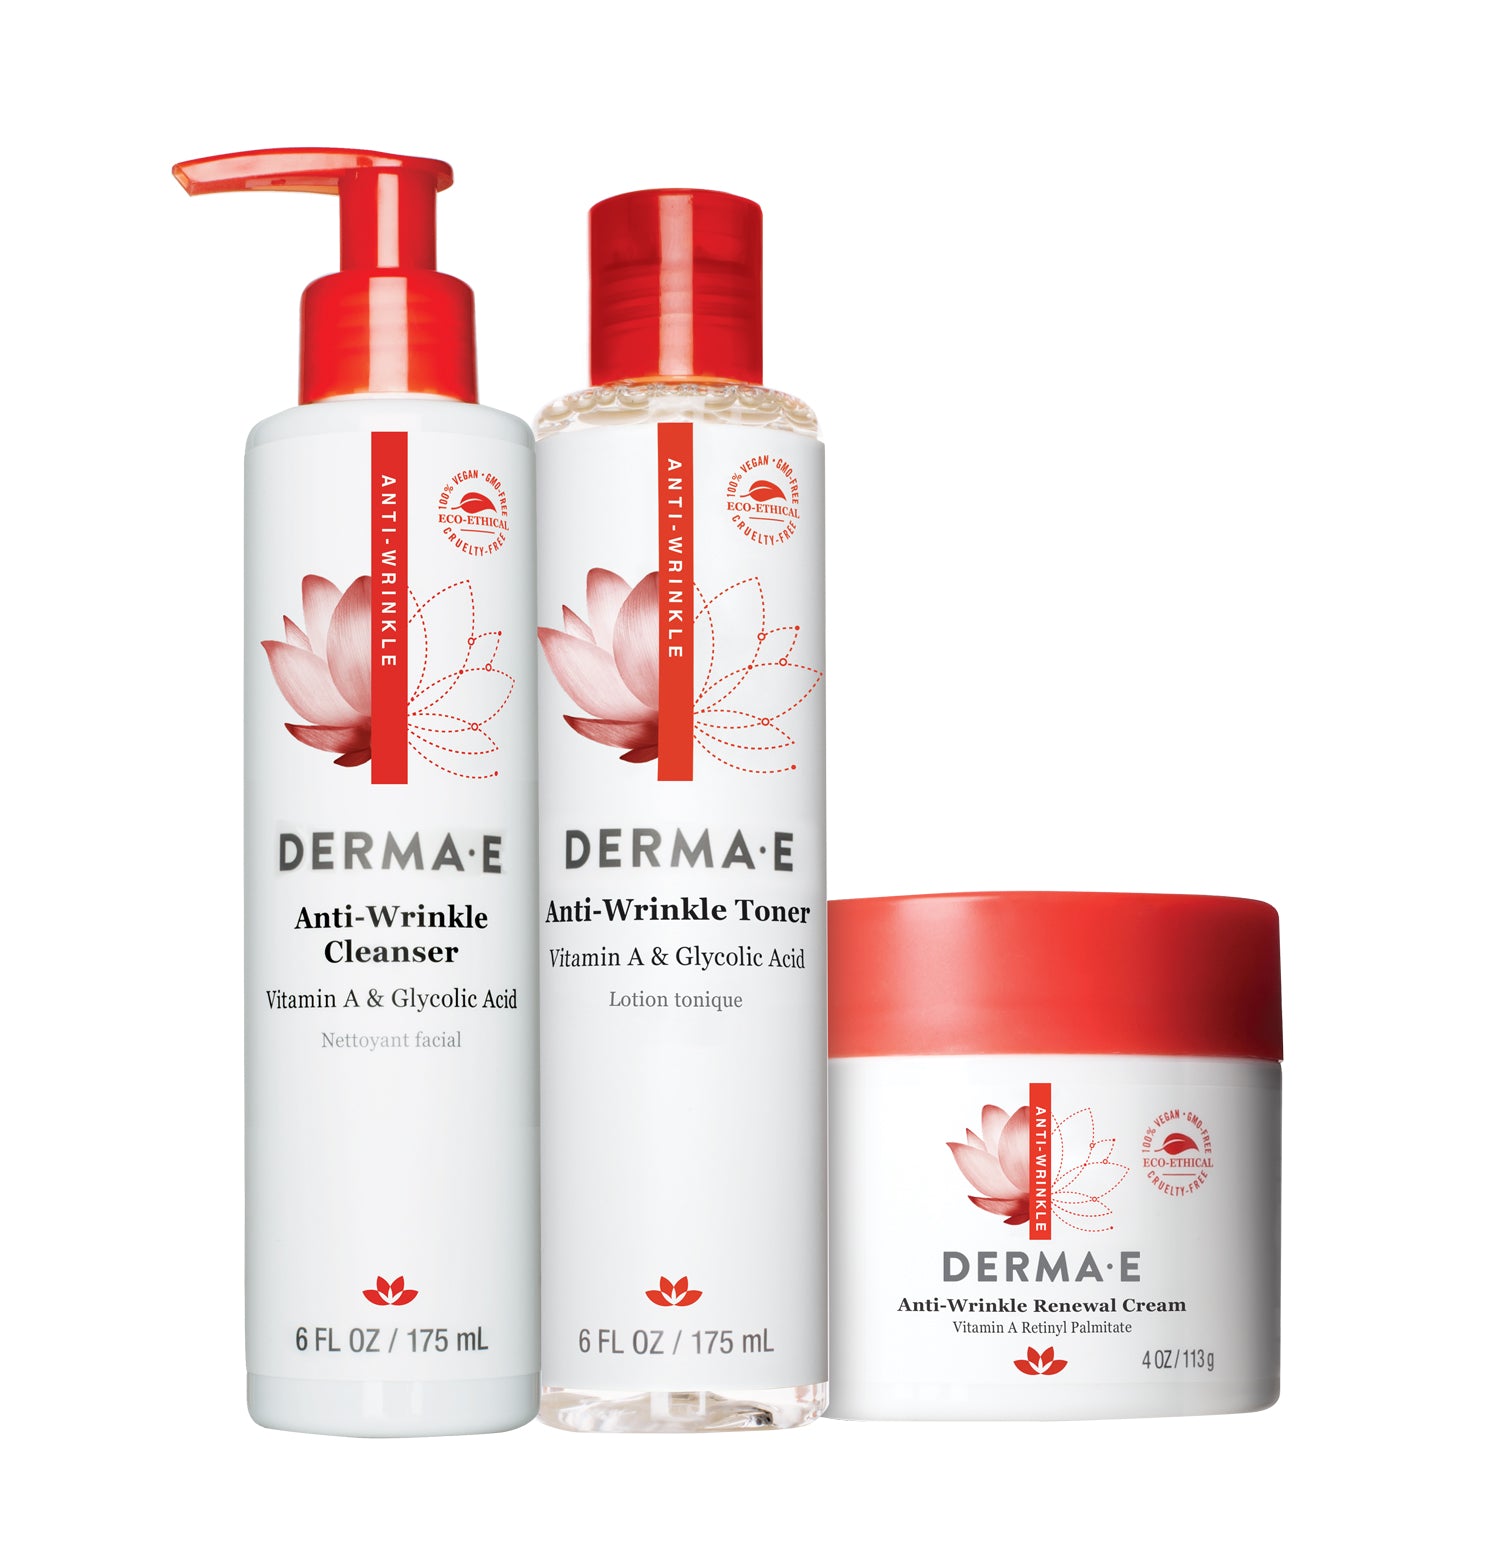 G derm косметика купить. Derma-e Anti-Wrinkle Renewal Cream. Derma e витамин с. Косметика g Derm набор. G-Derm питательная маска.